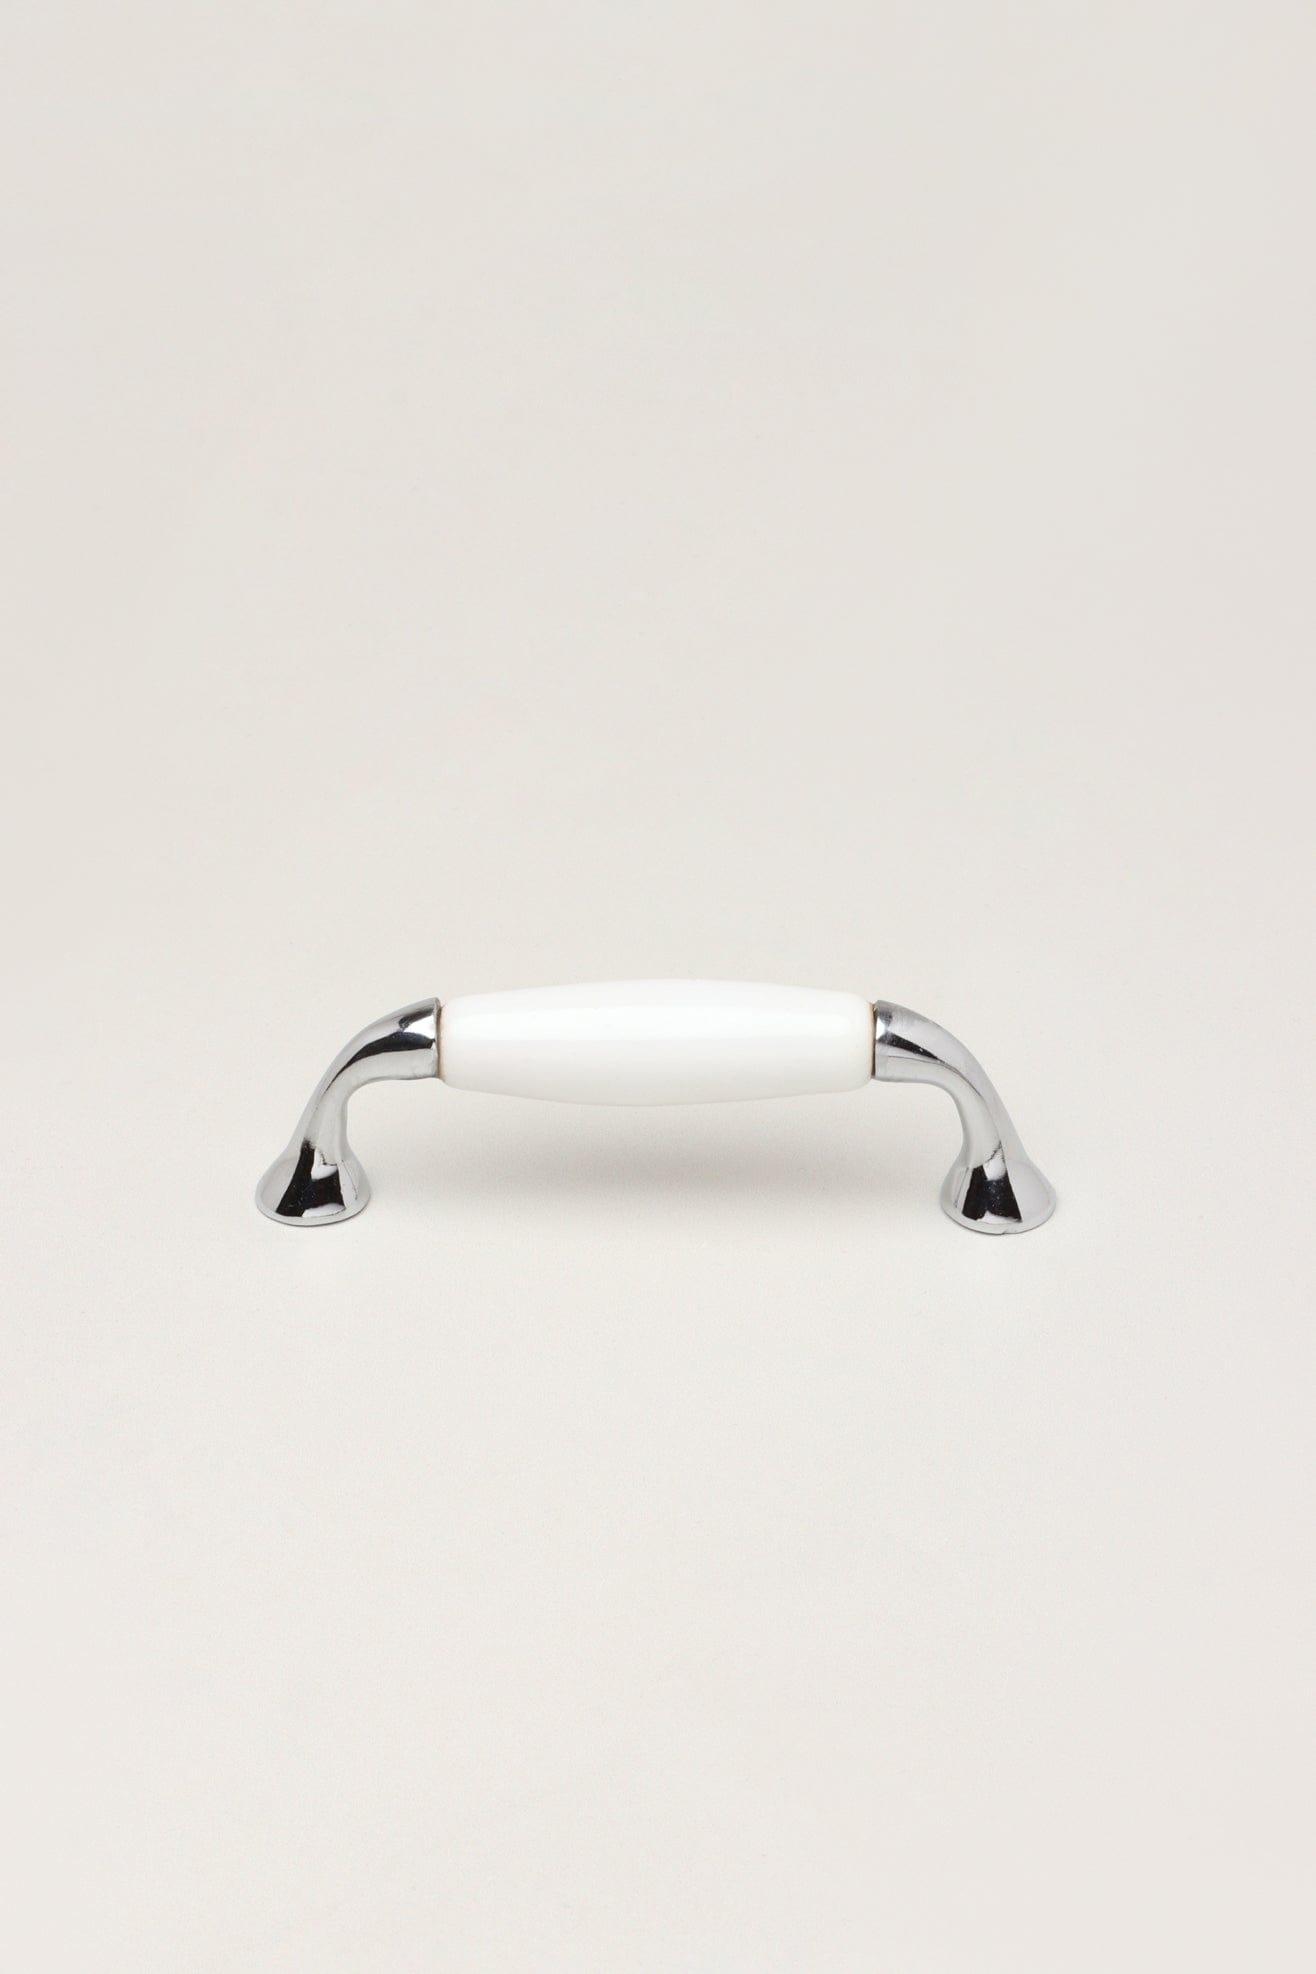 Gdecorstore Cabinet Knobs & Handles White White or Grey Ceramic Kitchen Cupboard Pull Handles